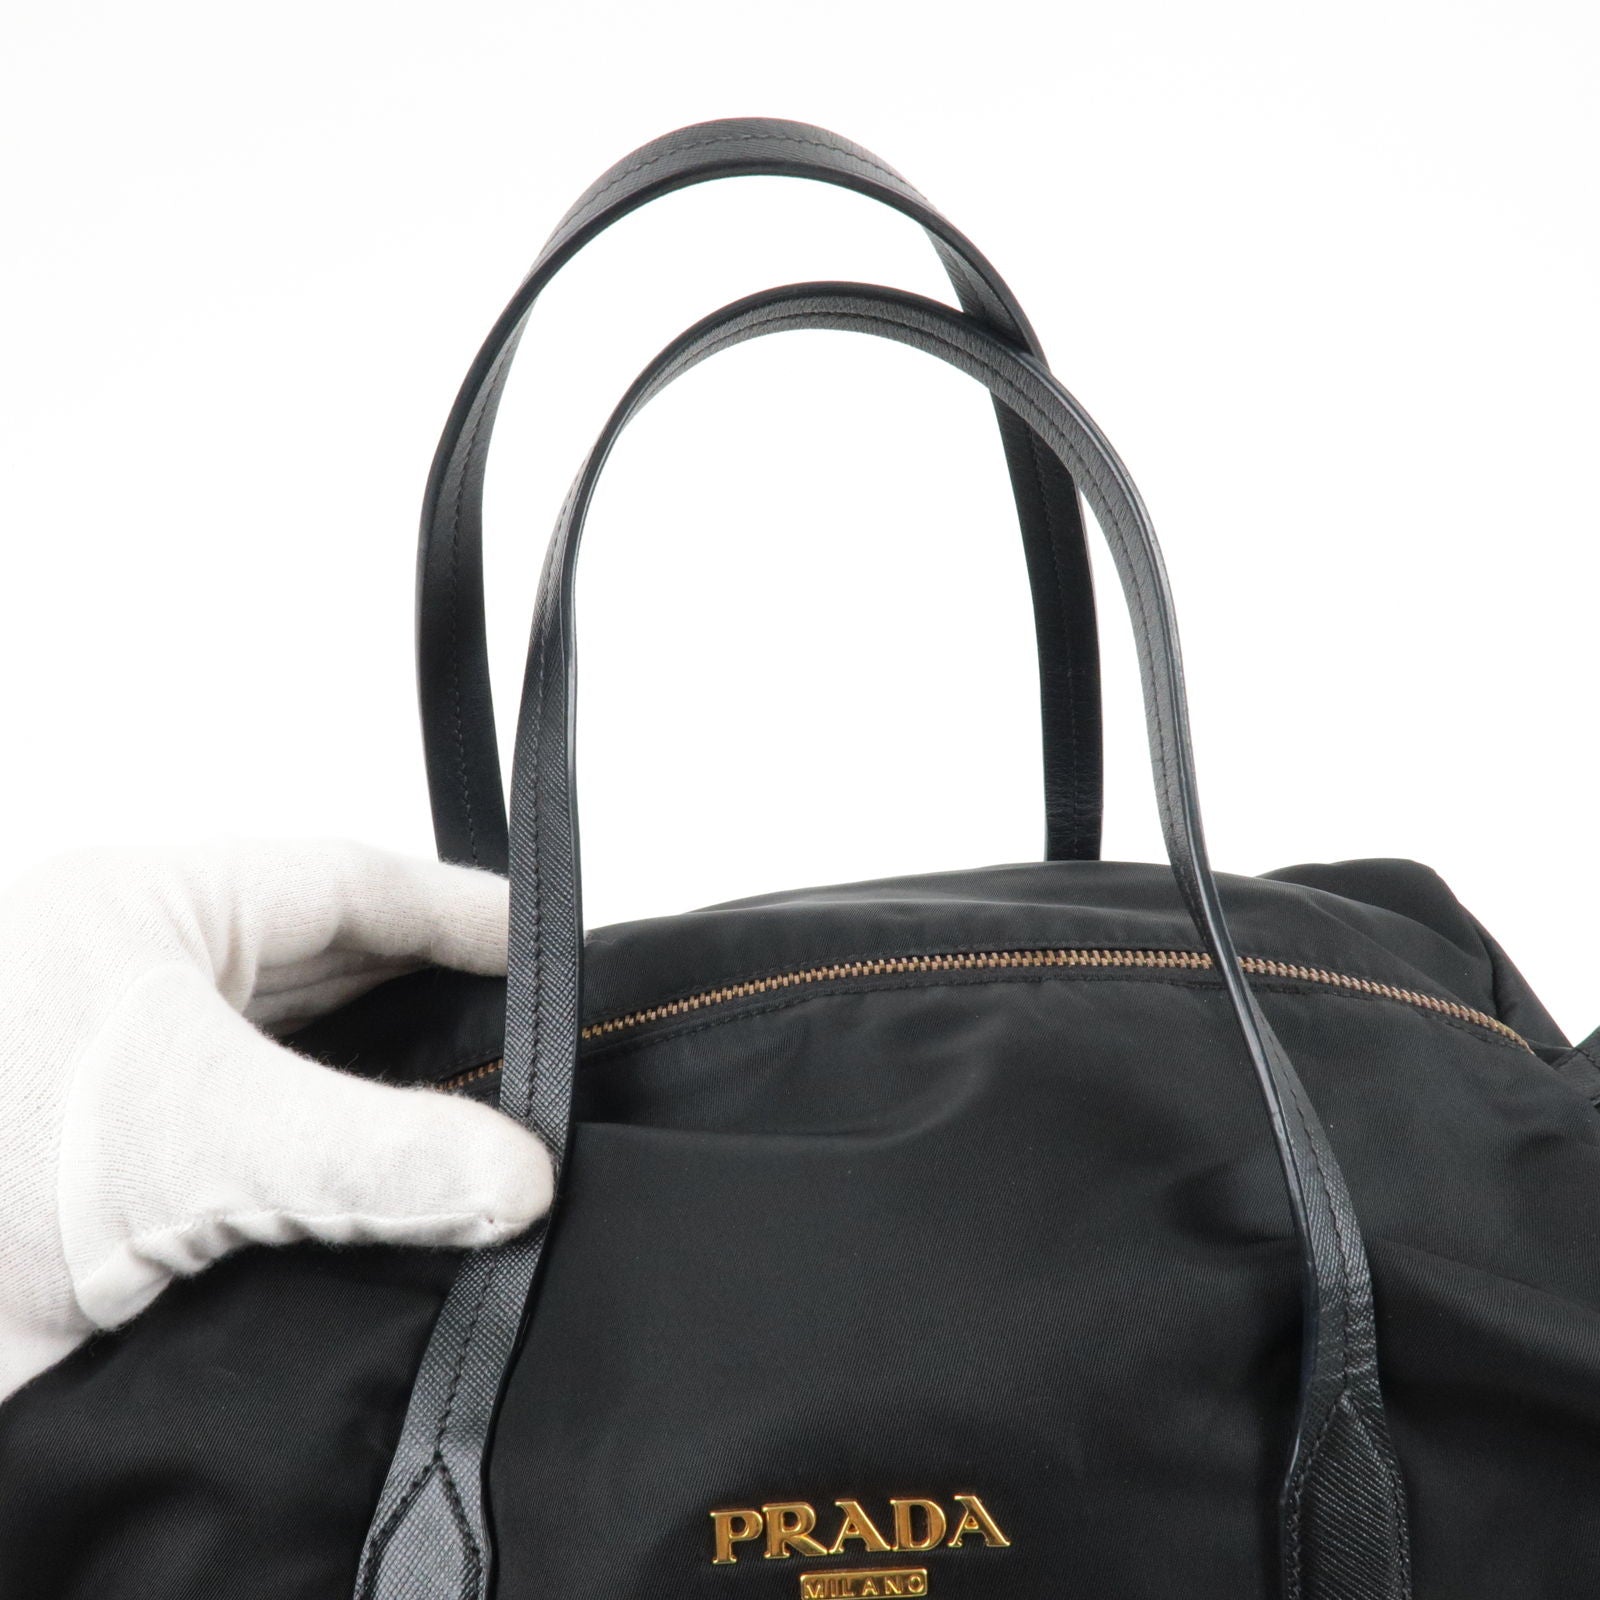 The Return of the Prada Nylon Bag